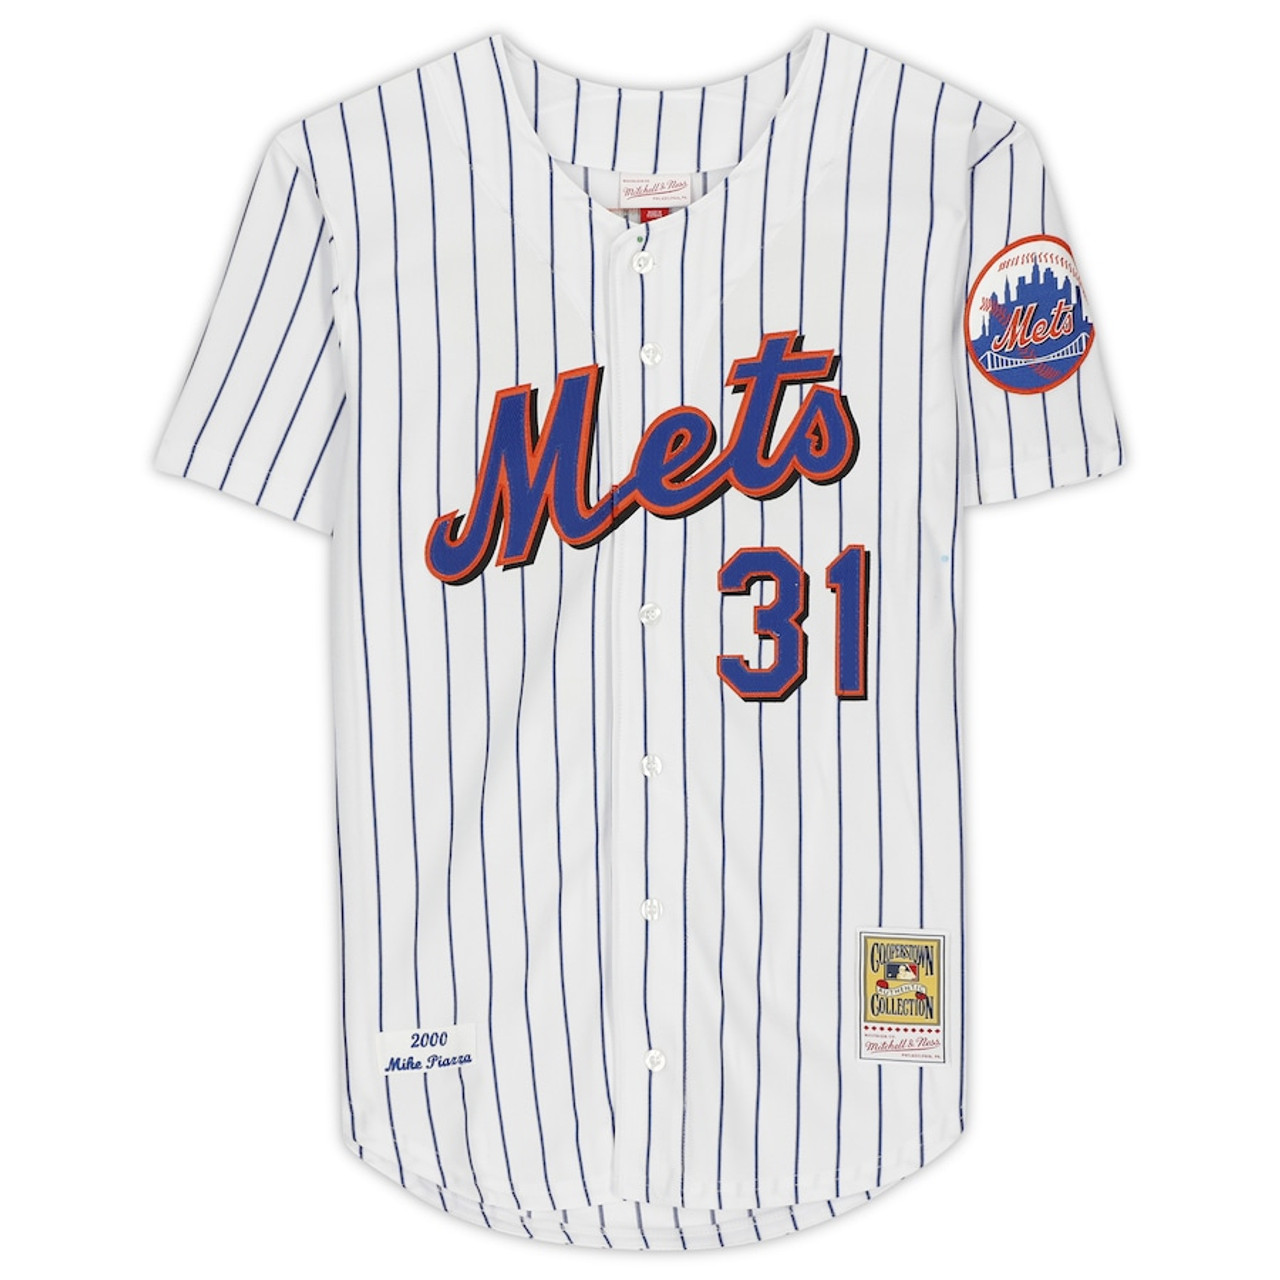 Mike Piazza New York Mets Autographed Alternate Orange Rawlings Mach Pro Replica Batting Helmet with HOF 2016 Inscription - Fanatics Exclusive